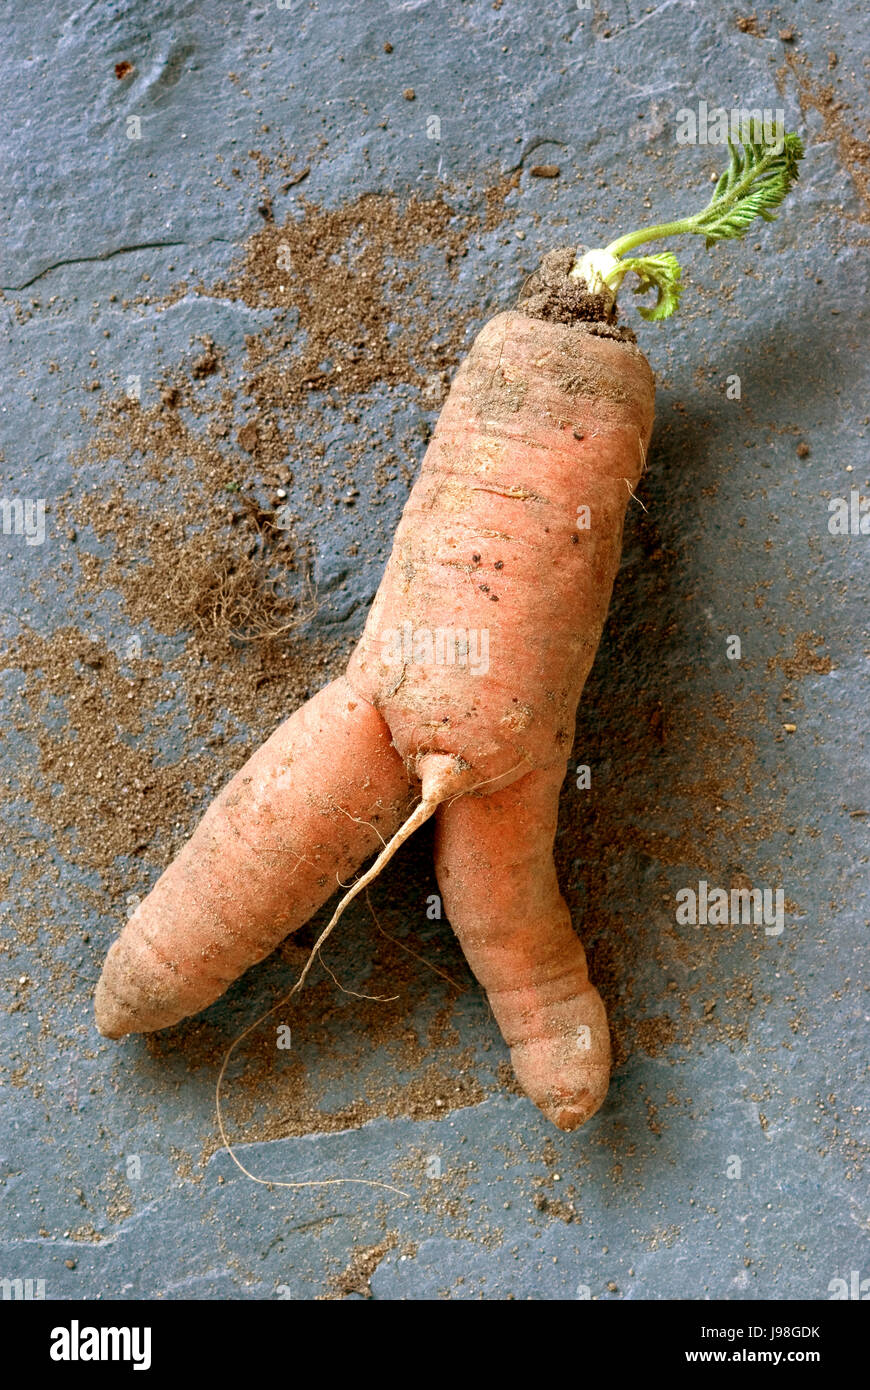 Rude Carrot Stock Photo